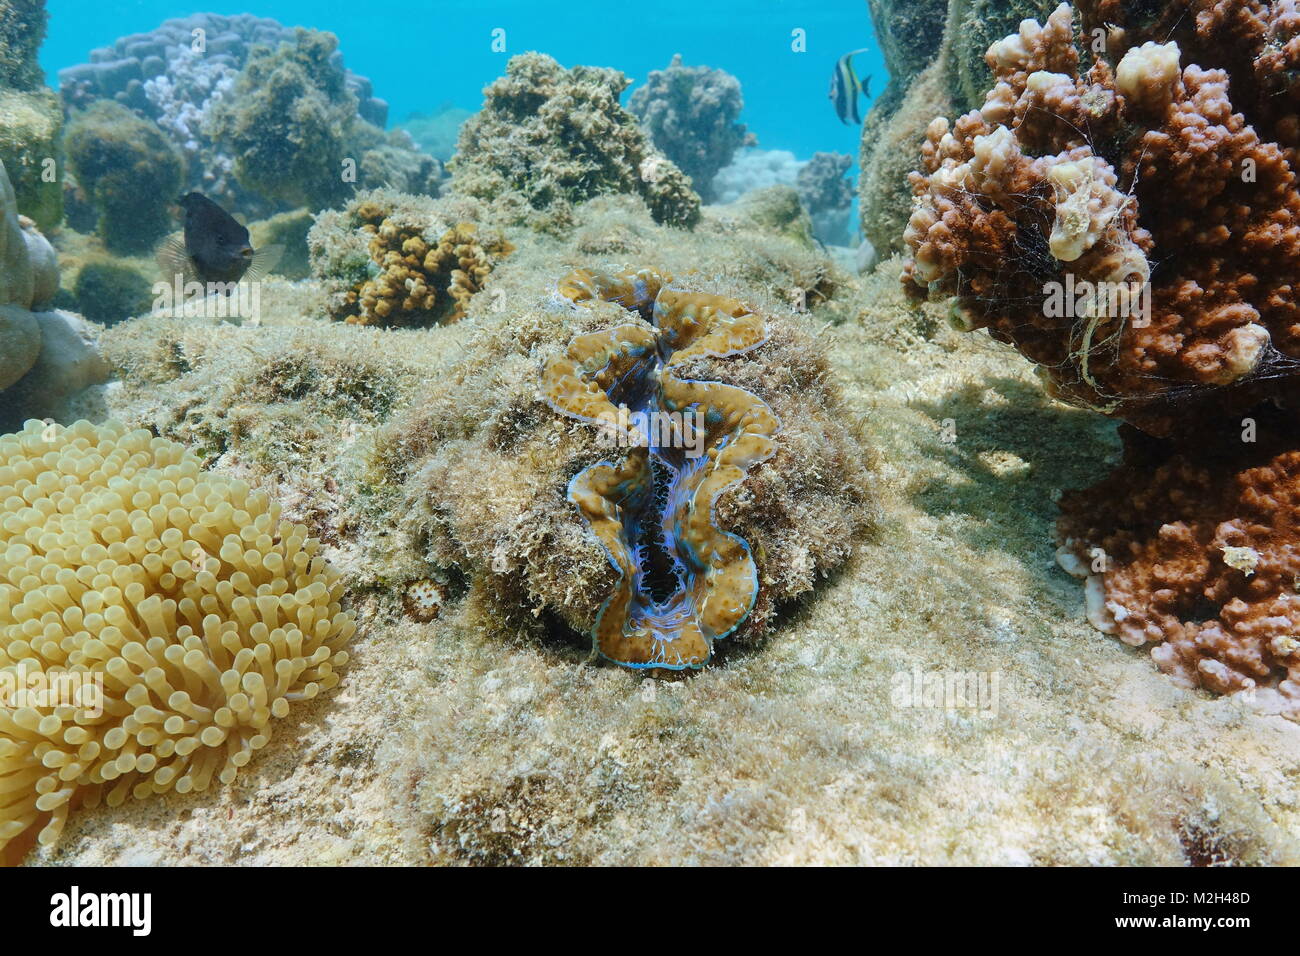 Bivalve mollusk maxima clam, Tridacna maxima, underwater in the Pacific ocean, French polynesia Stock Photo